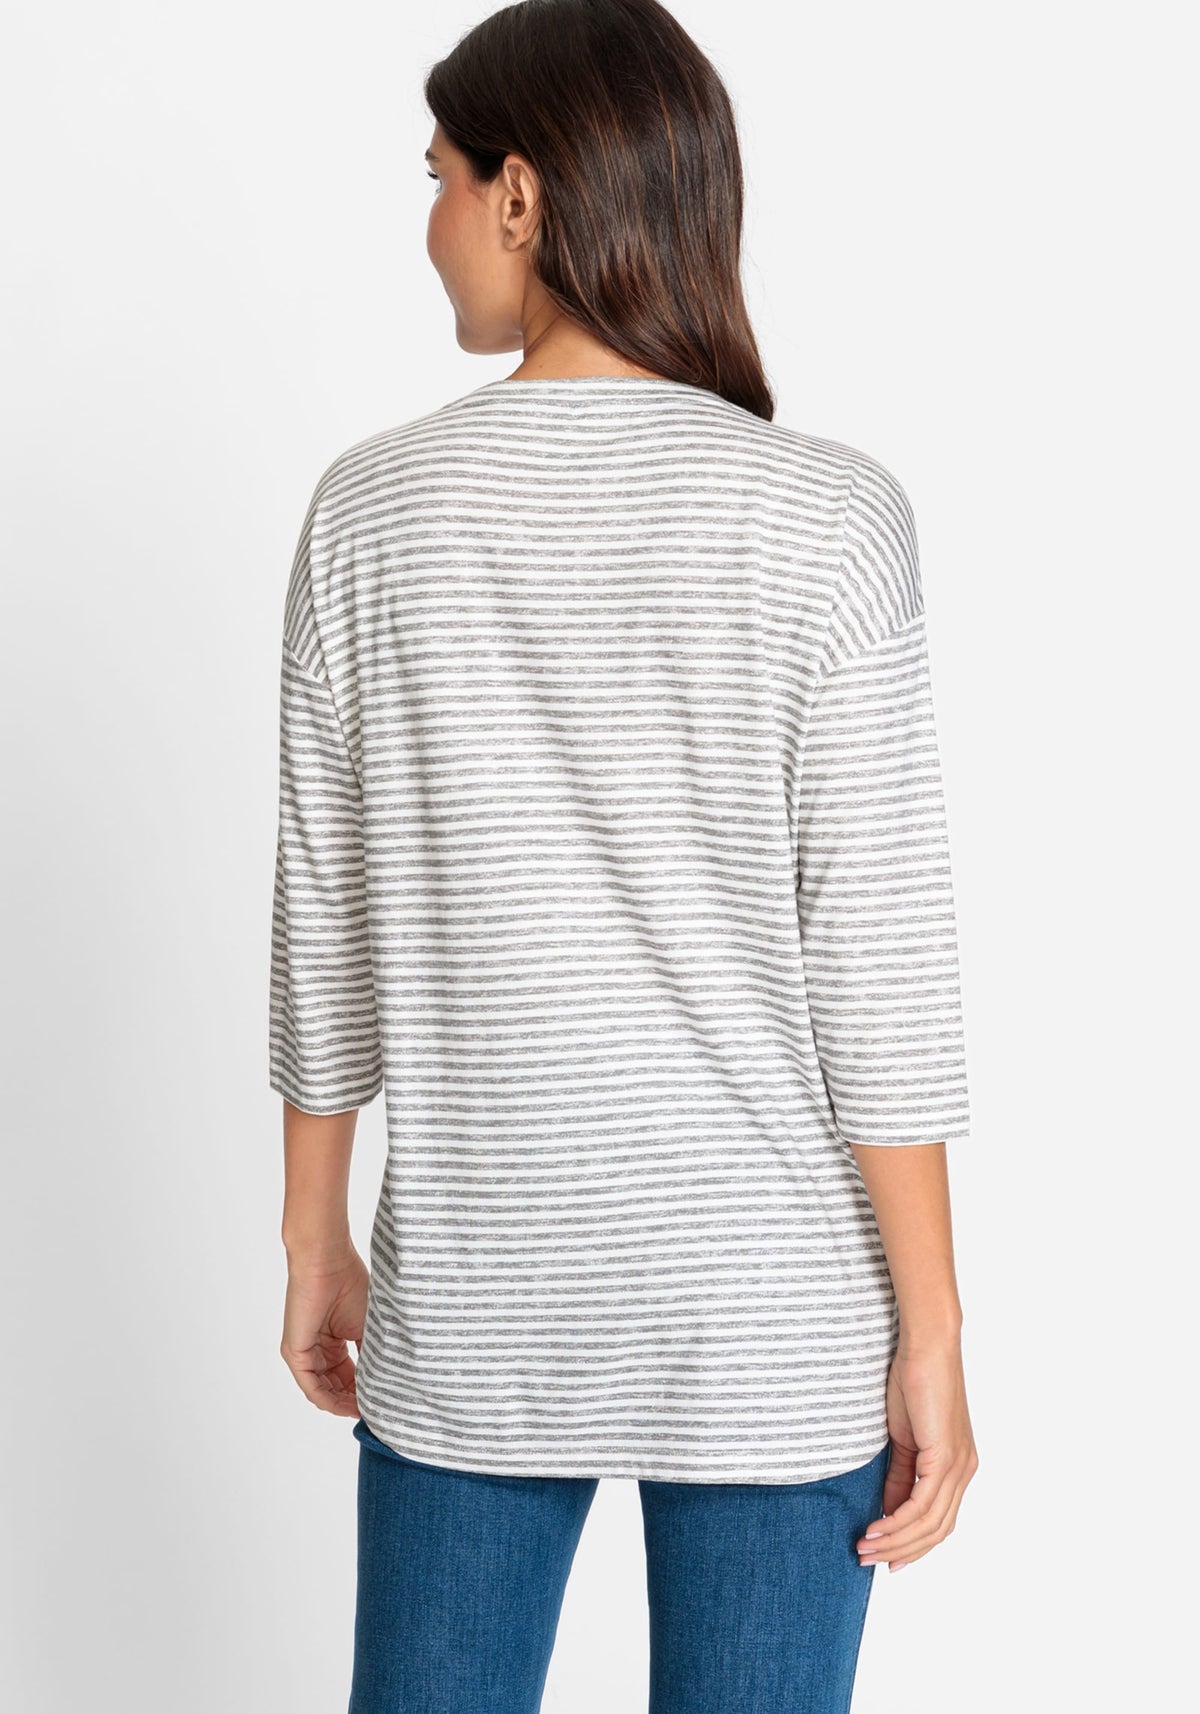 Cotton Blend Multi-Print T-Shirt containing TENCEL™ Modal